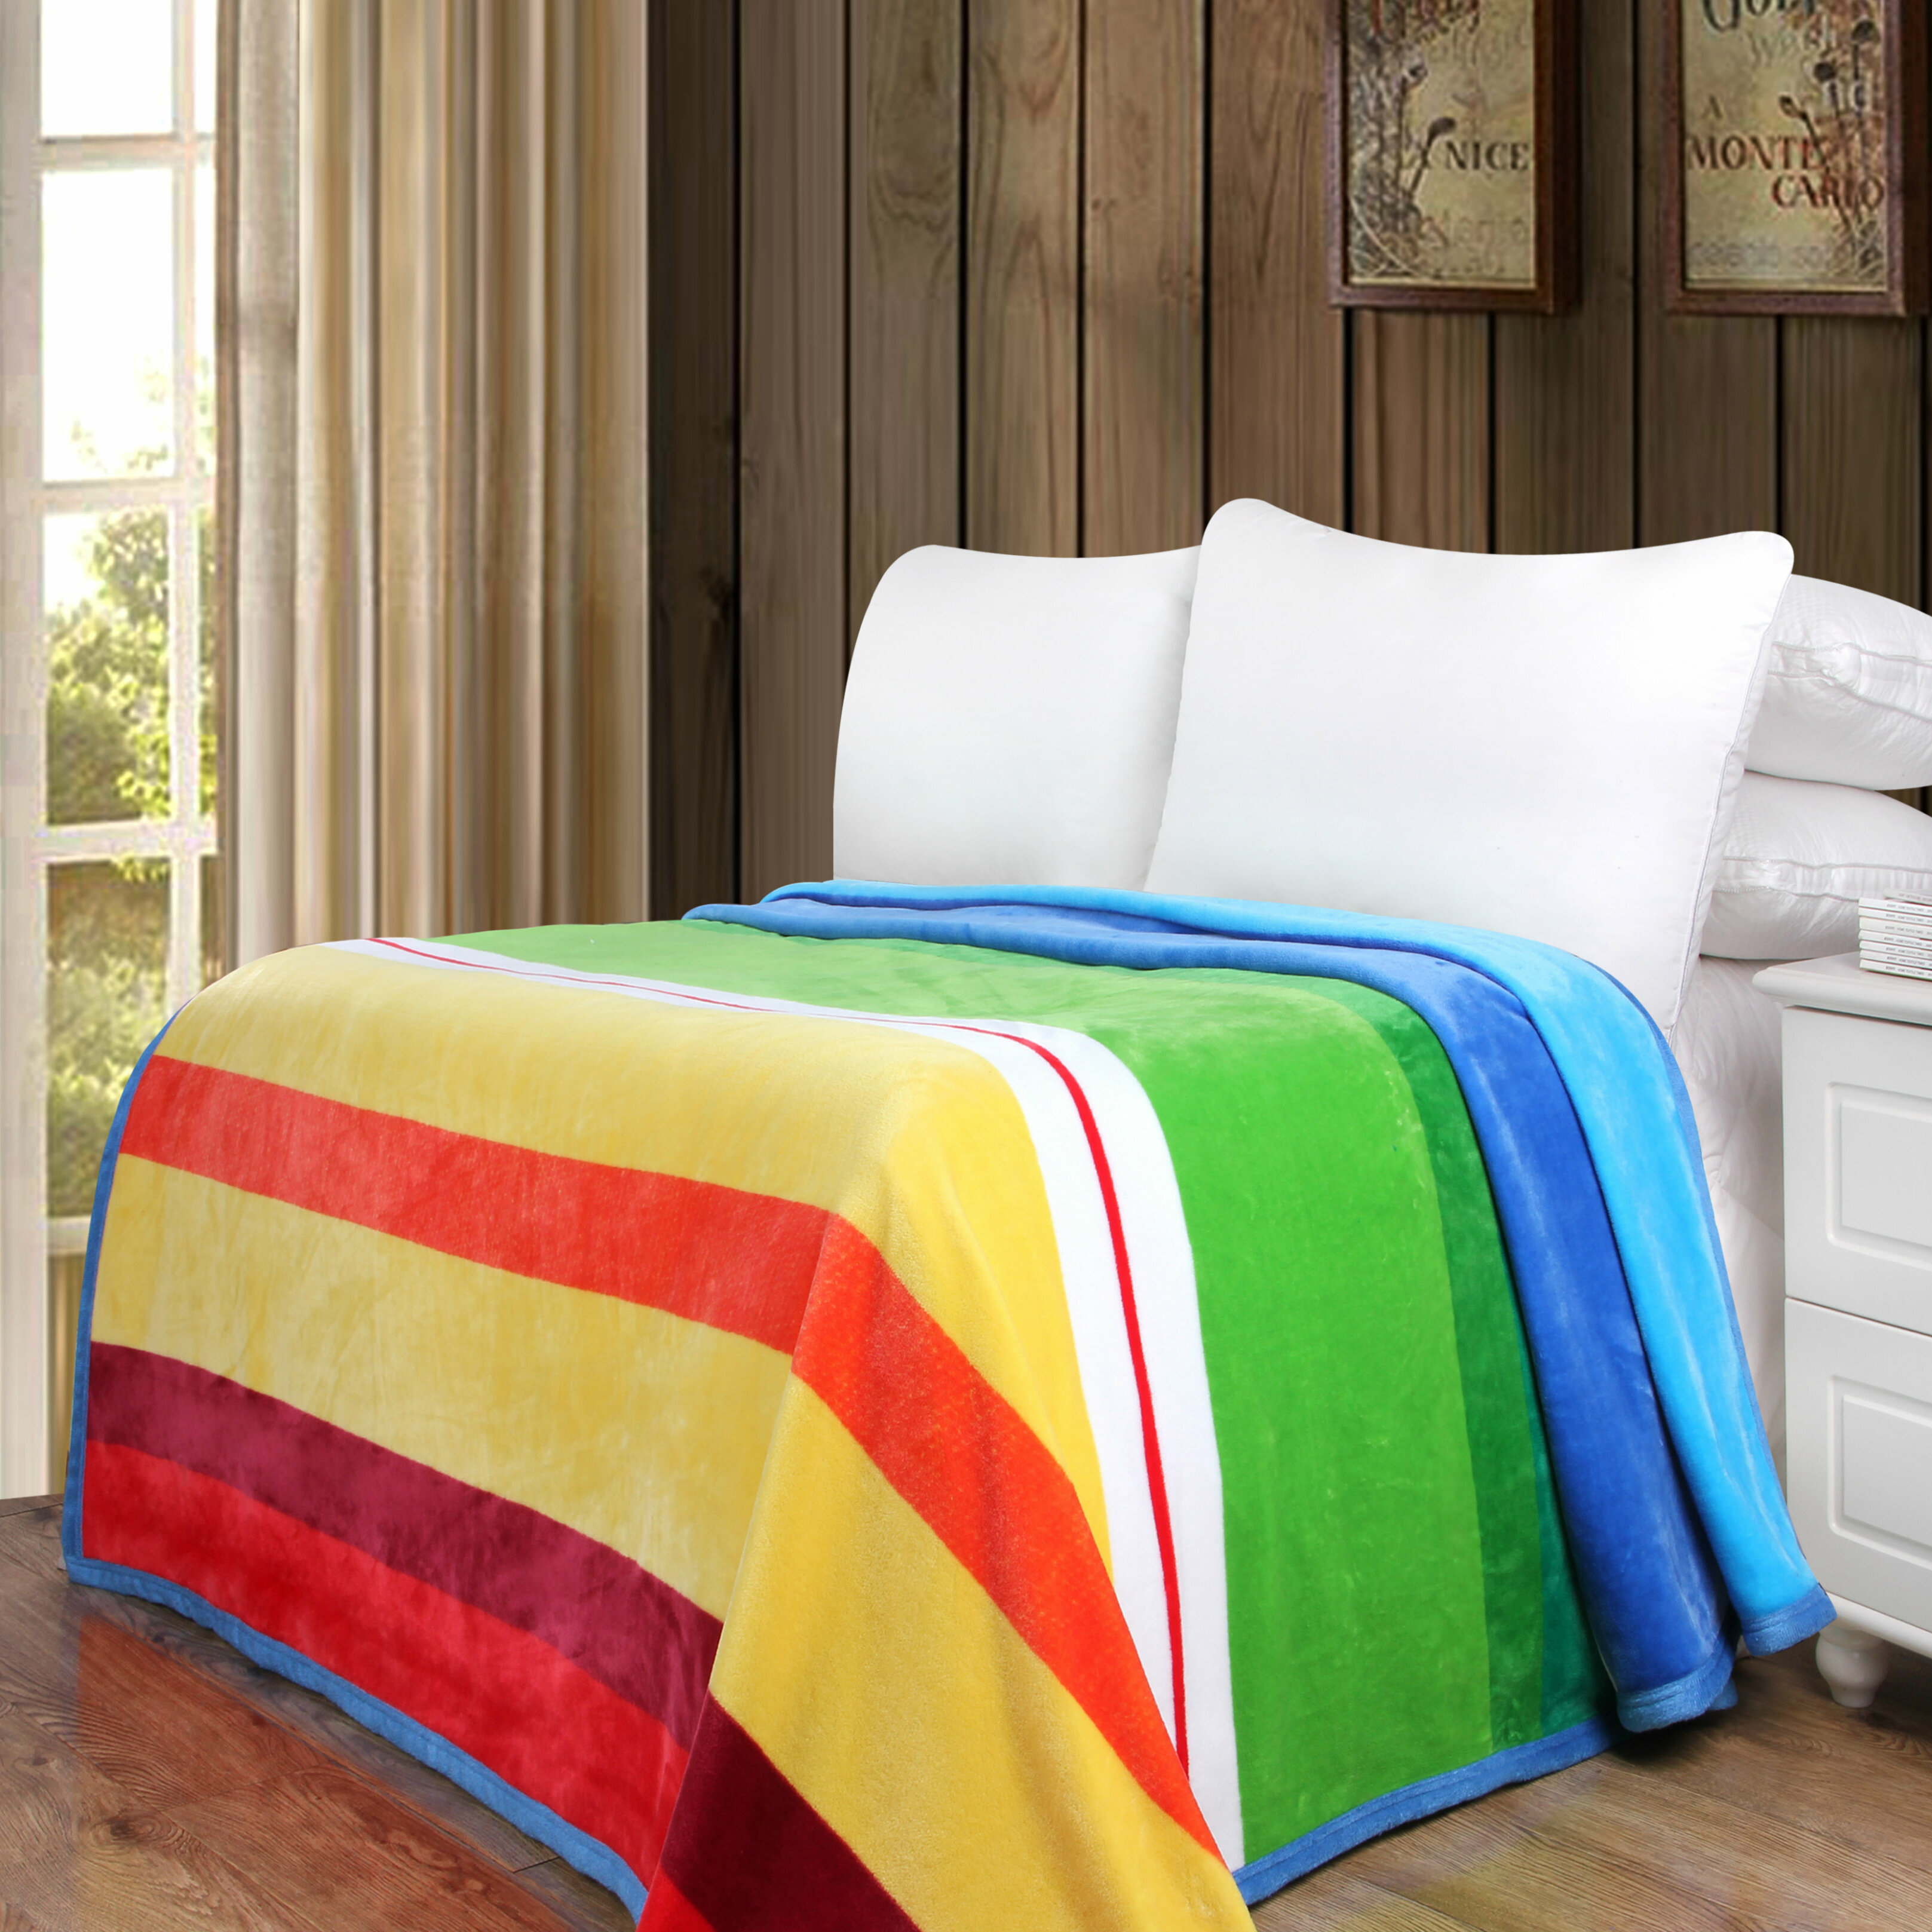 DaDa Bedding Solid Striped Rainbow Print Reversible Soft Warm Throw Blanket Reviews Wayfair